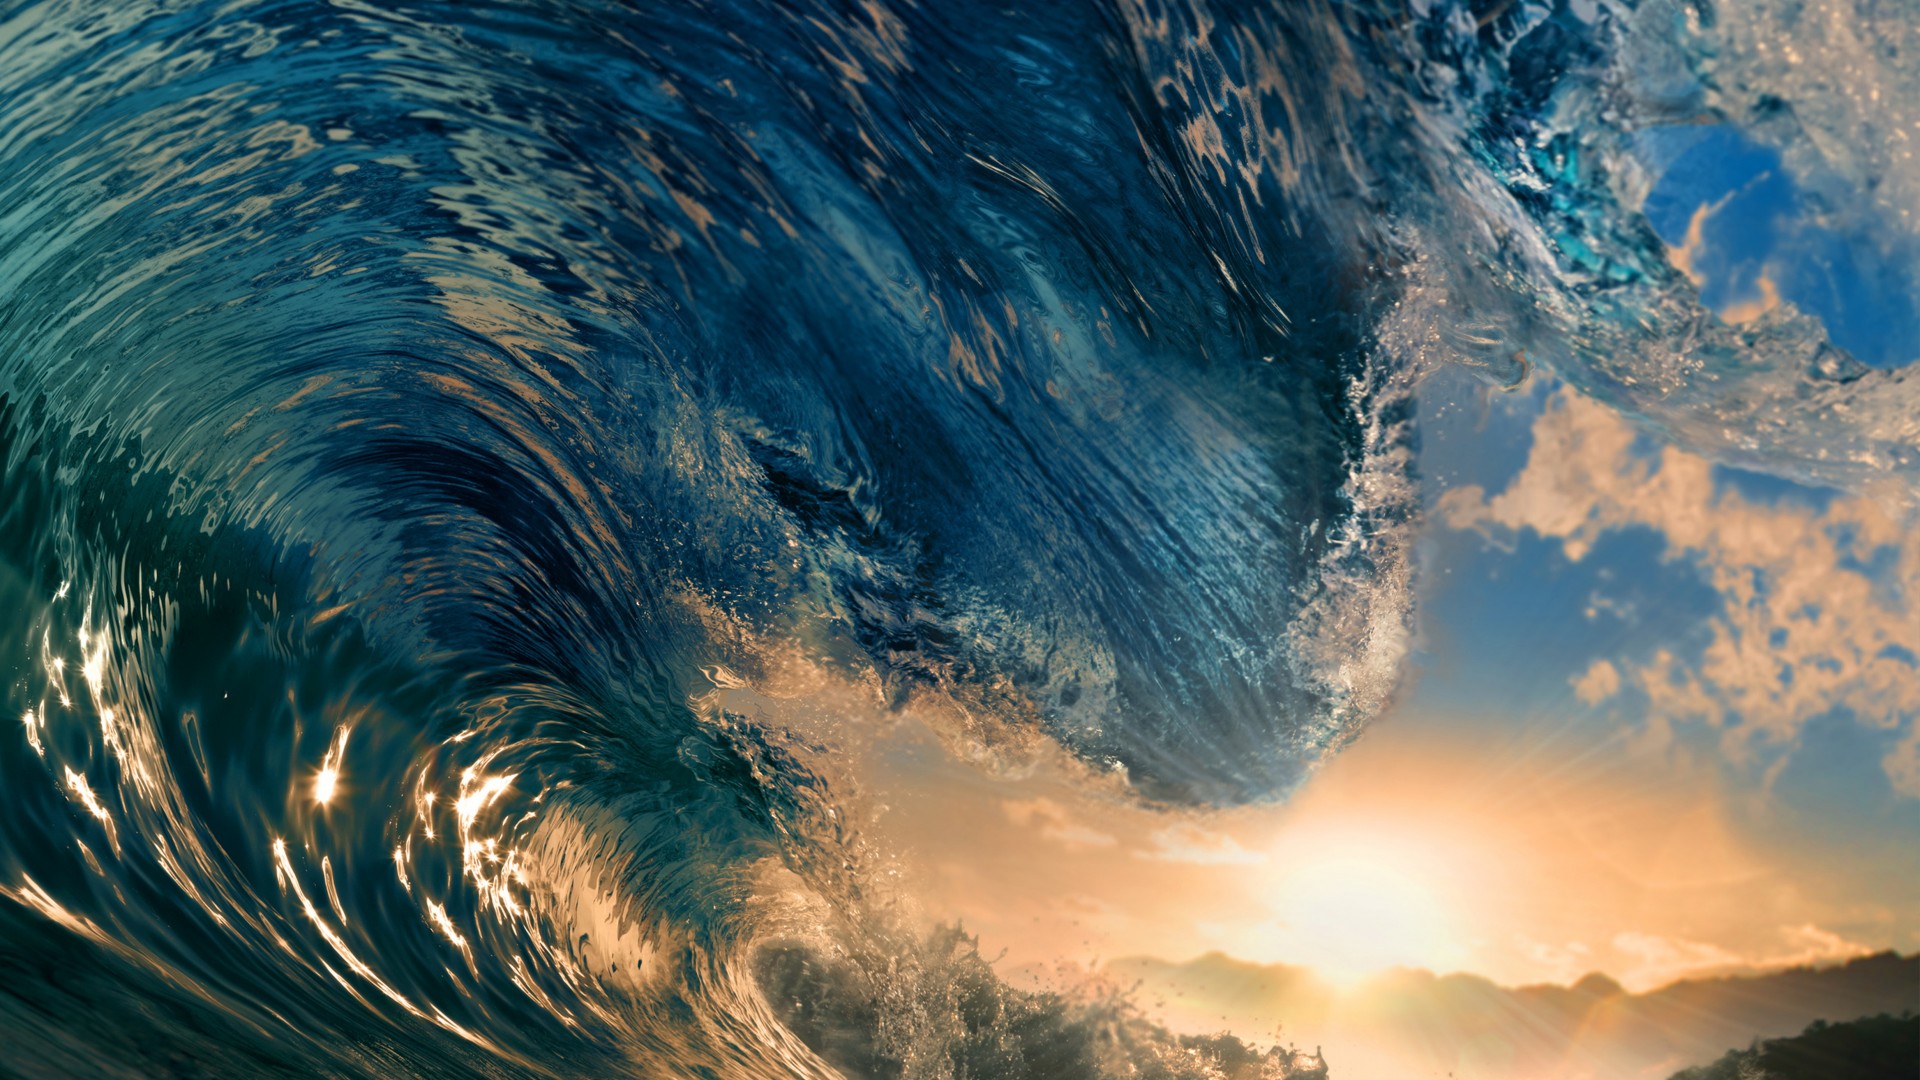 Sea, 5k, 4k wallpaper, ocean, water, wave, sunset, sky, rays, sun, blue (horizontal)